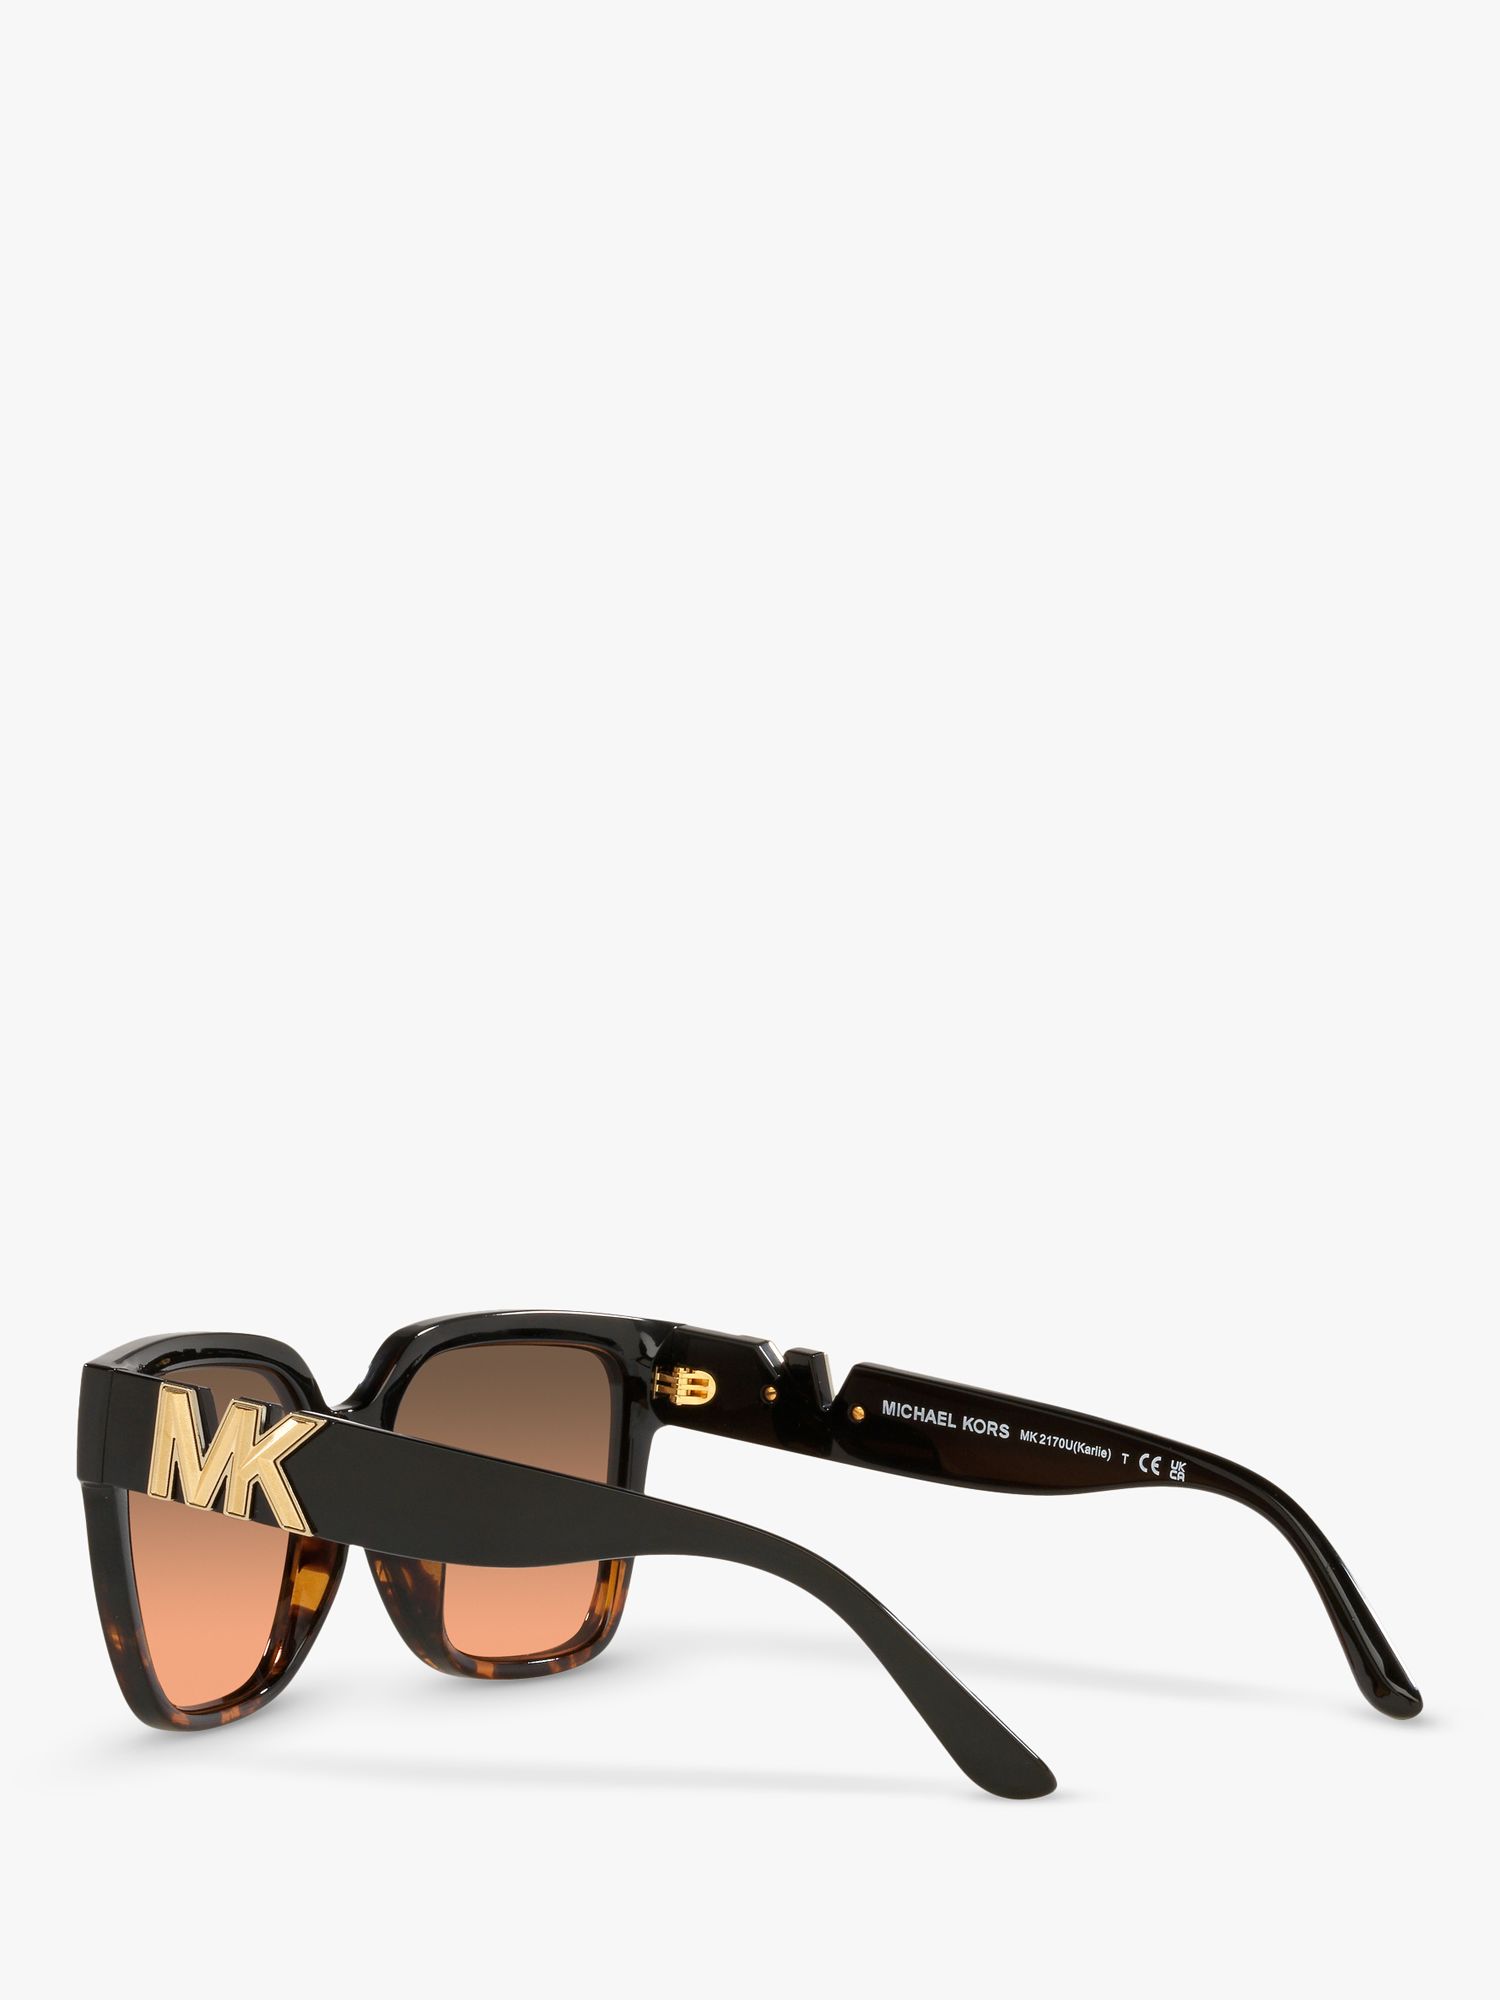 Michael Kors Mk2170u Women S Karlie Square Sunglasses Black Dark Tortoise At John Lewis And Partners